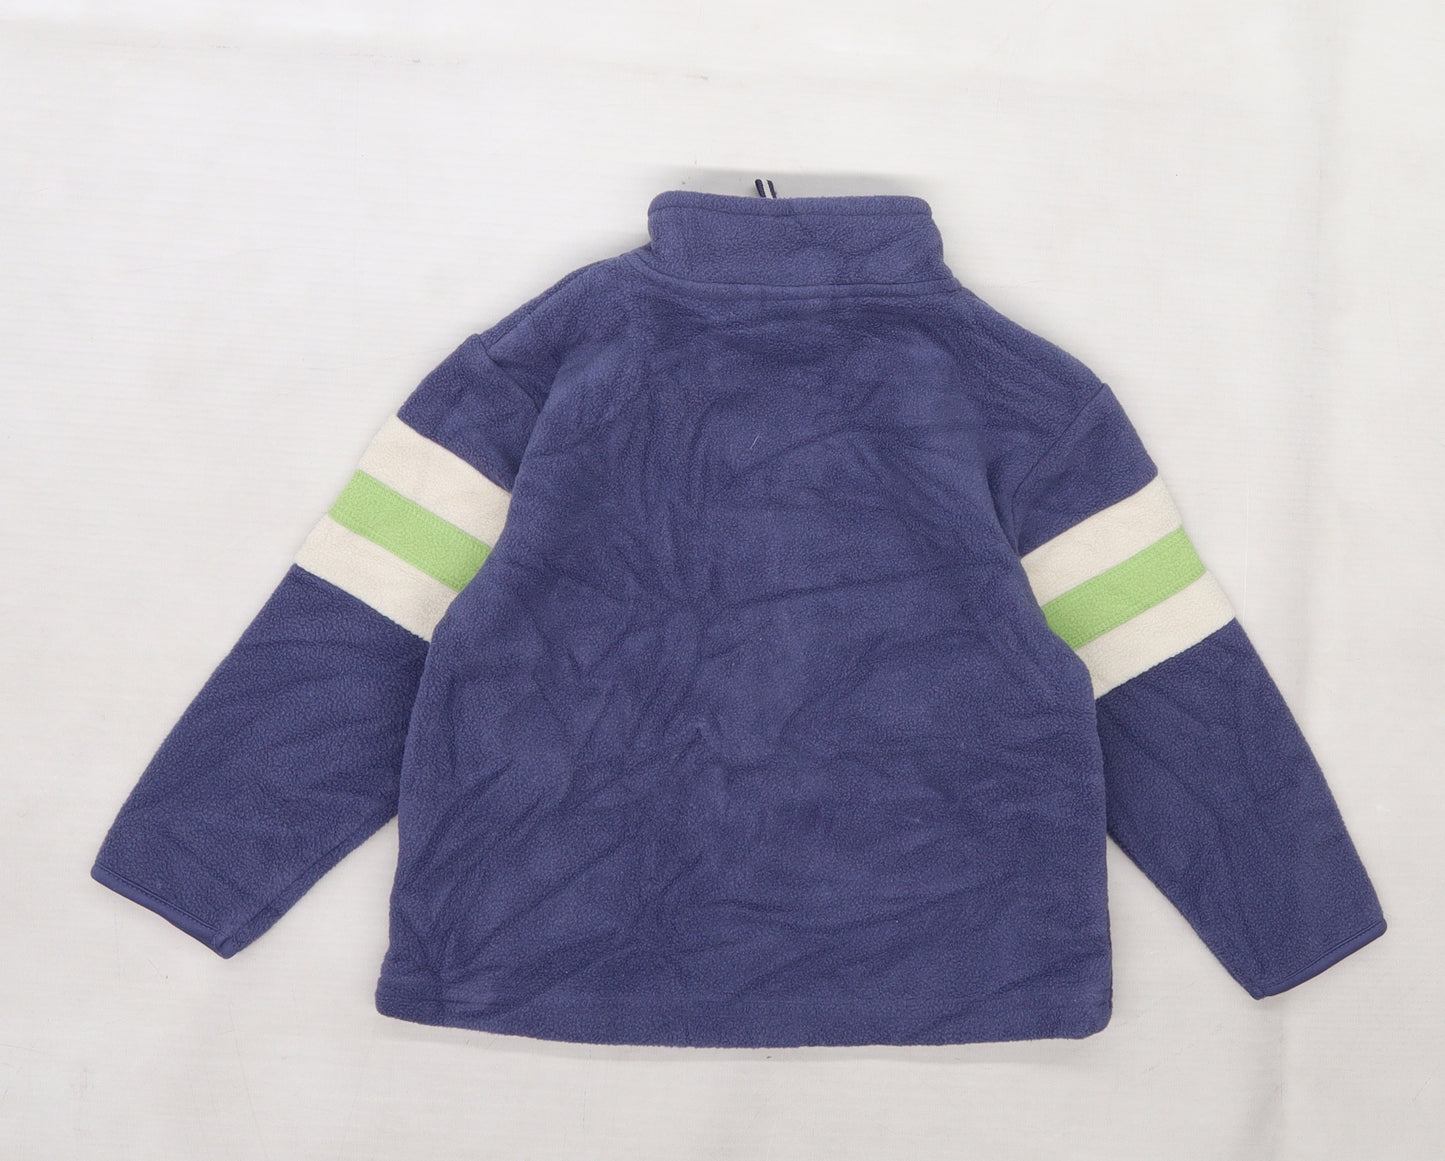 Active Boys Blue Striped Fleece Jacket  Size 2-3 Years